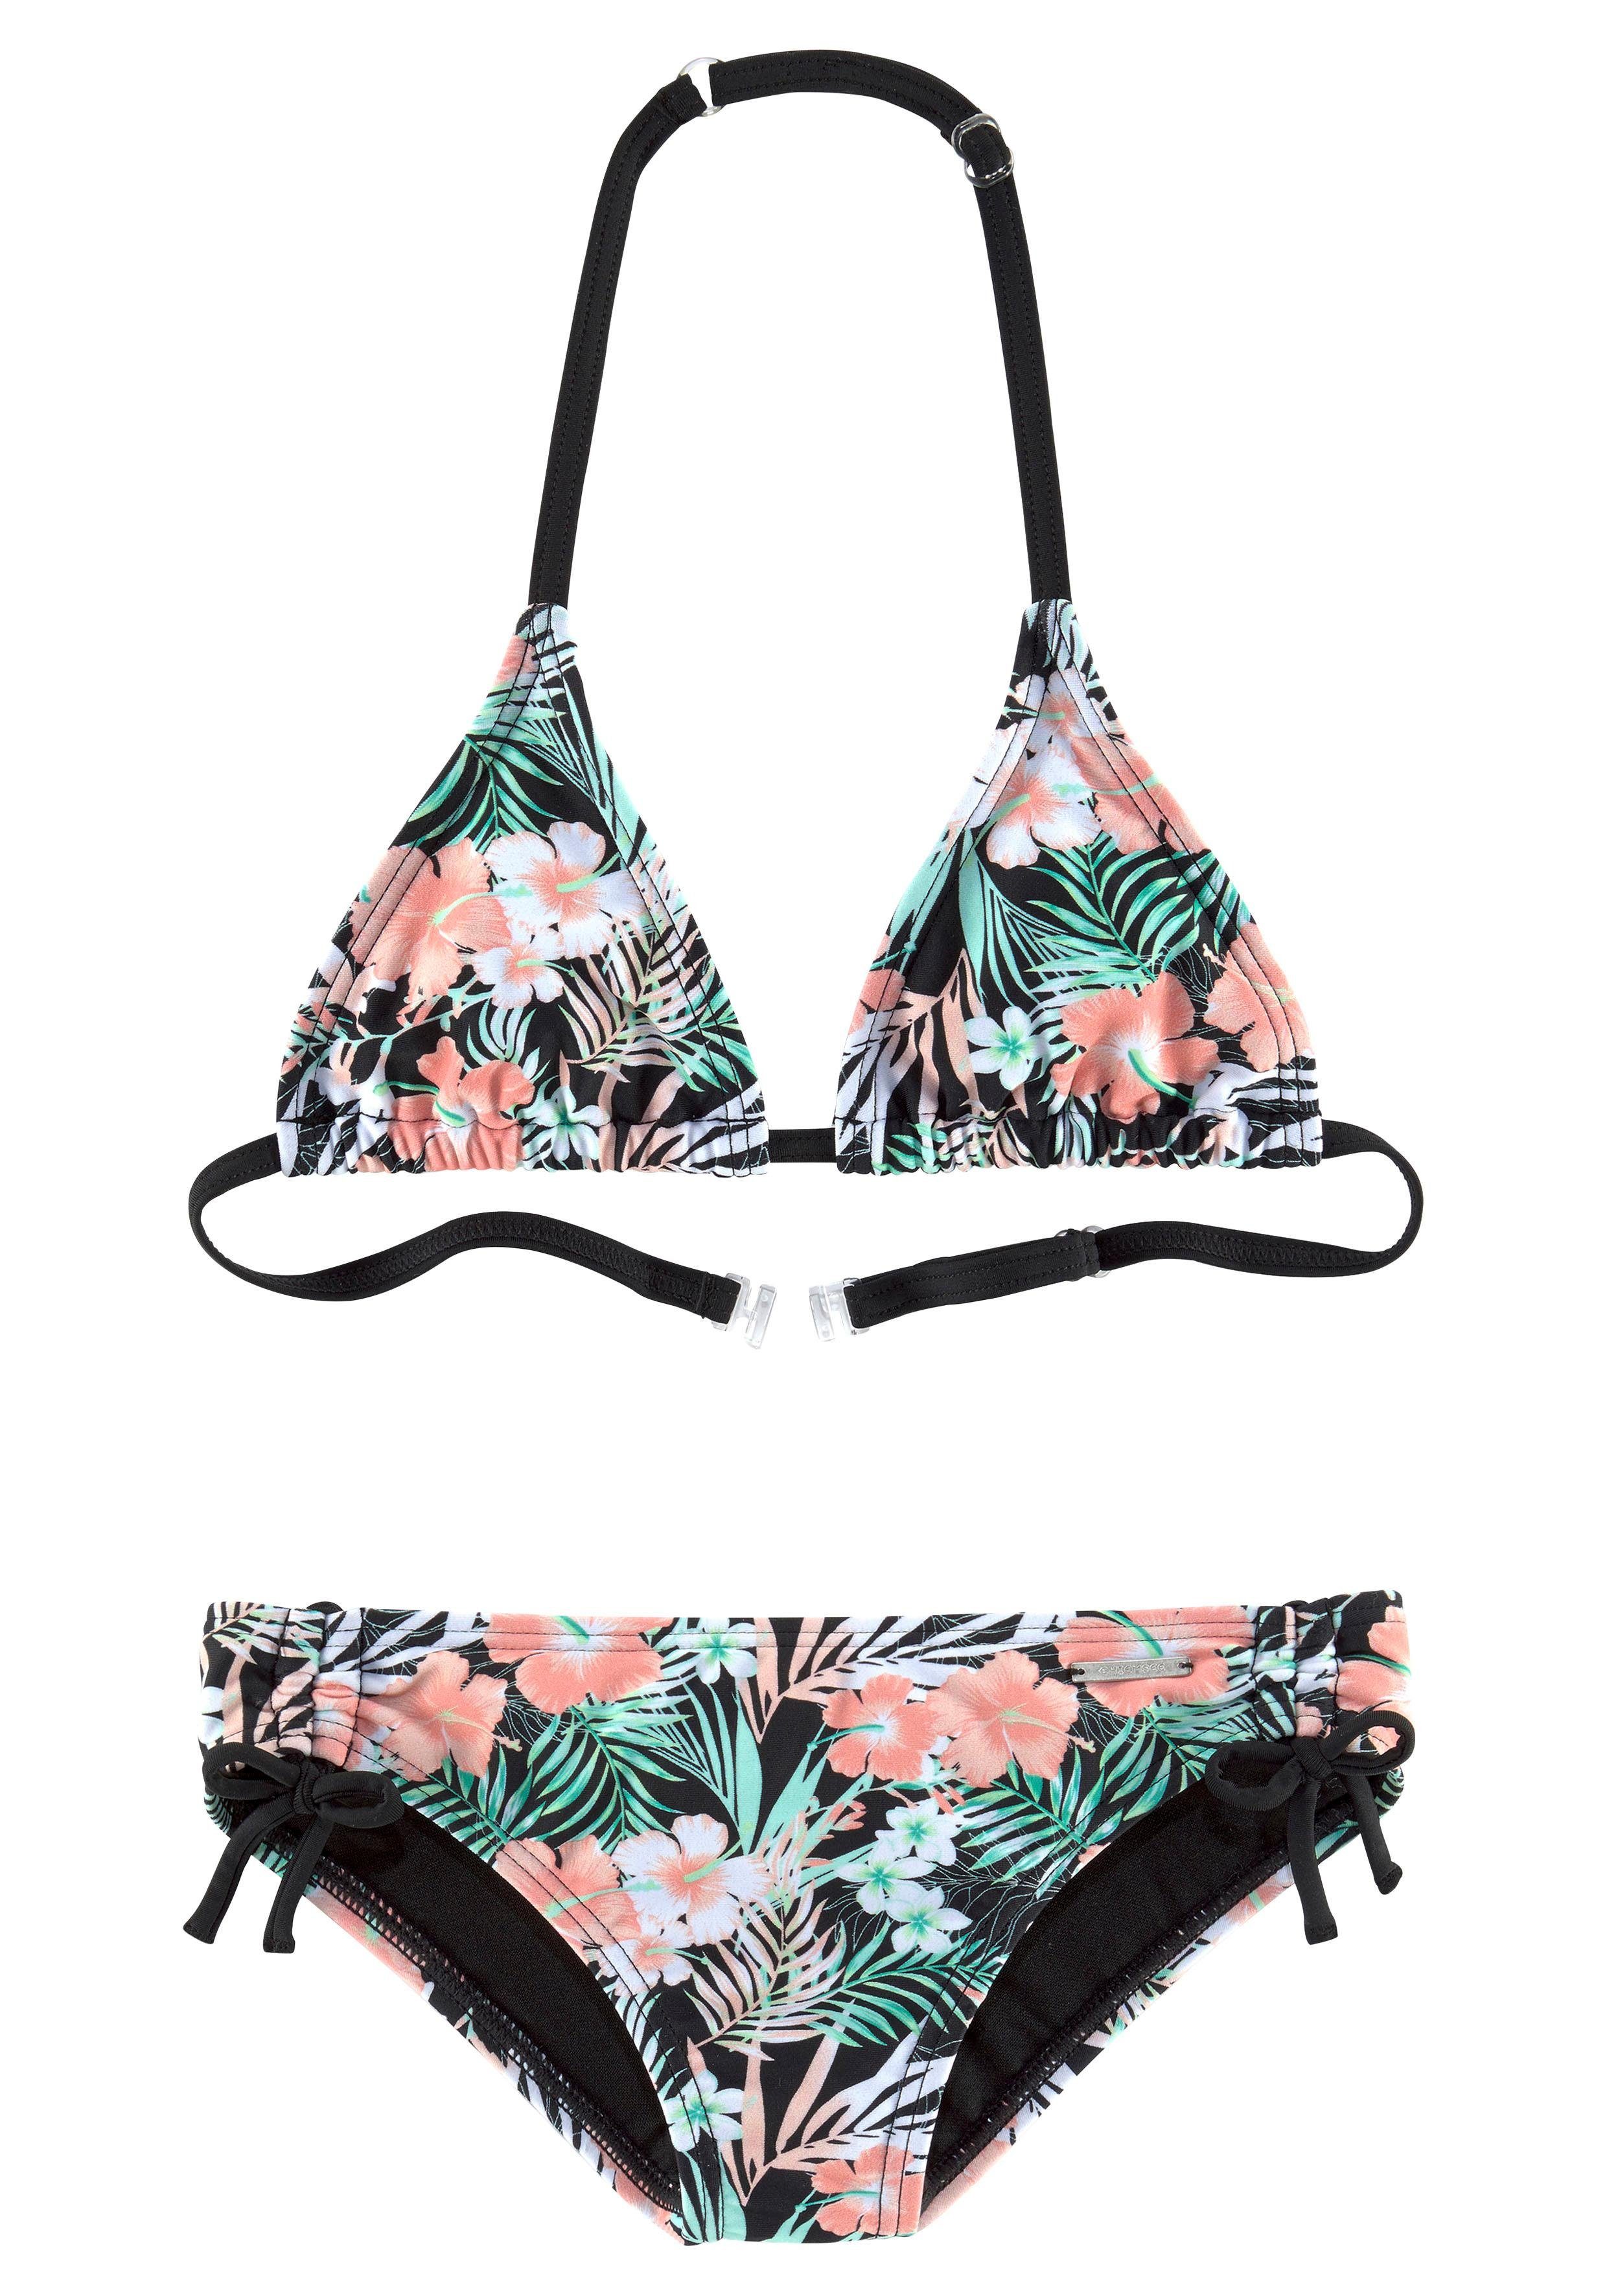 Chiemsee Triangel-Bikini Design mit floralem